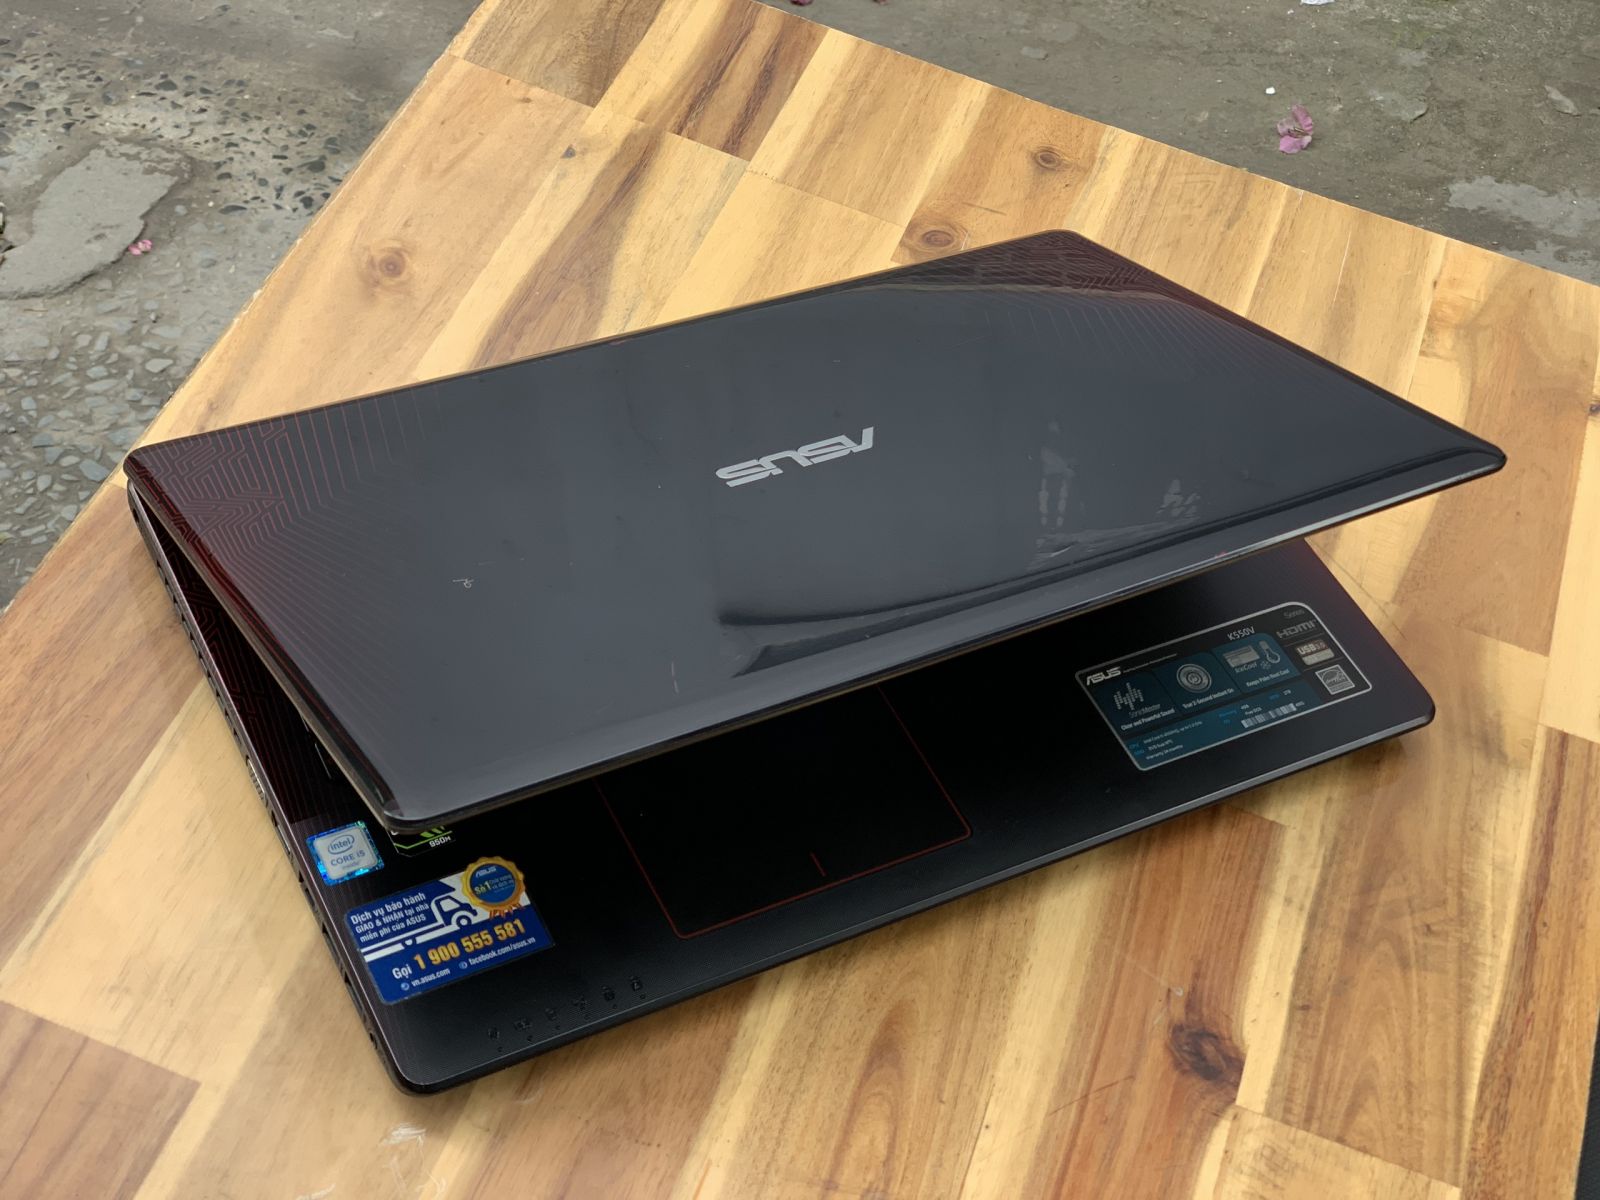 Laptop Asus K550V, i5 6300HQ 4G 1000G Vga GTX950M Đẹp zin 100% Giá rẻ - 1